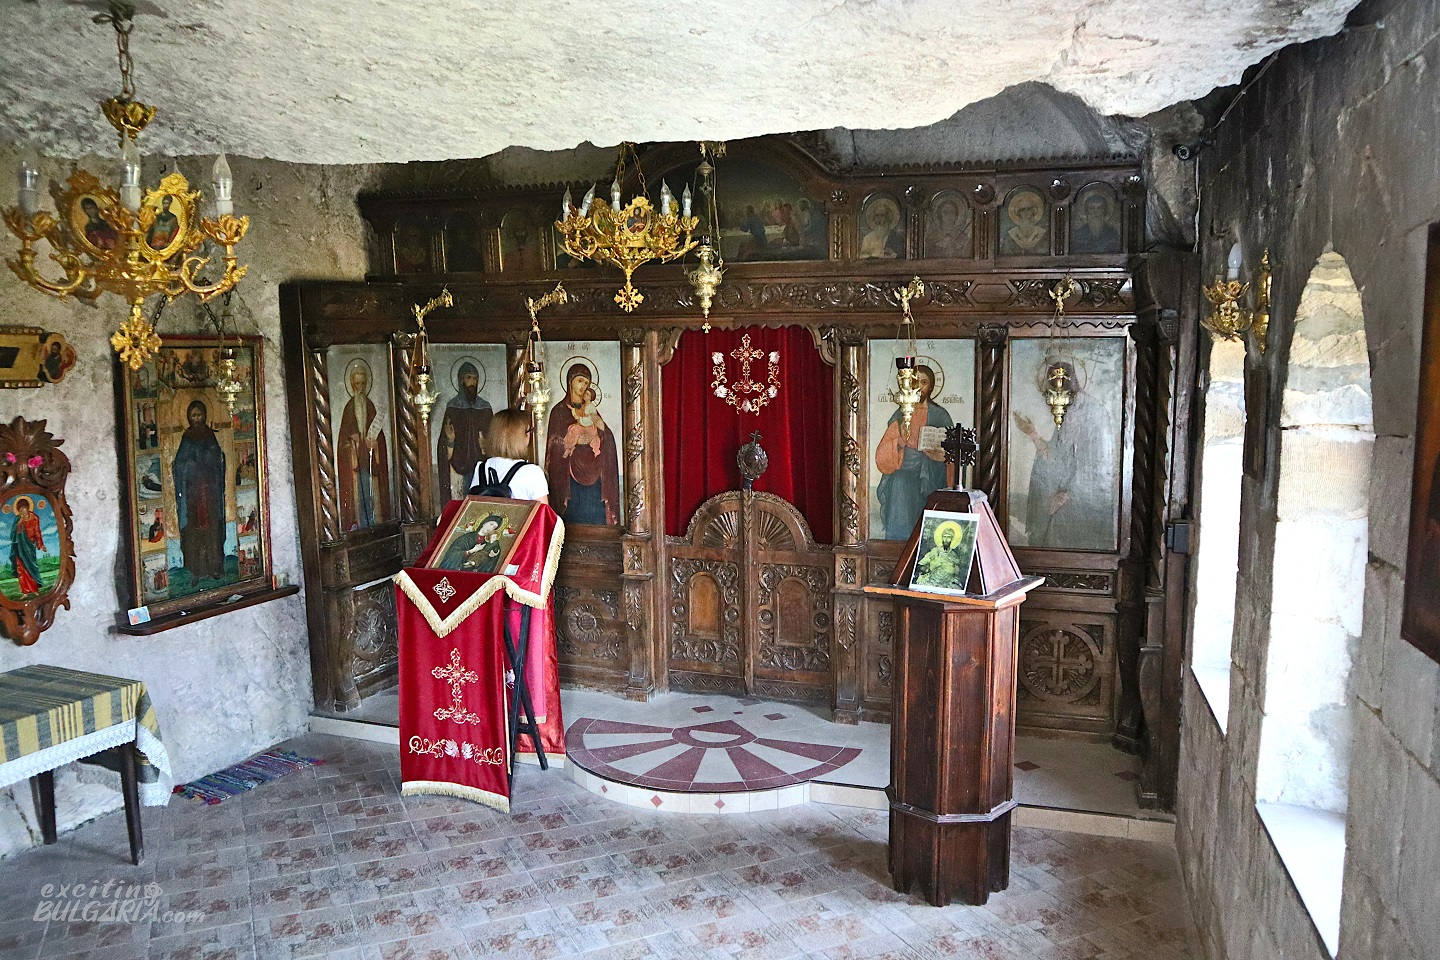 Inside the Basarbovo Monastery